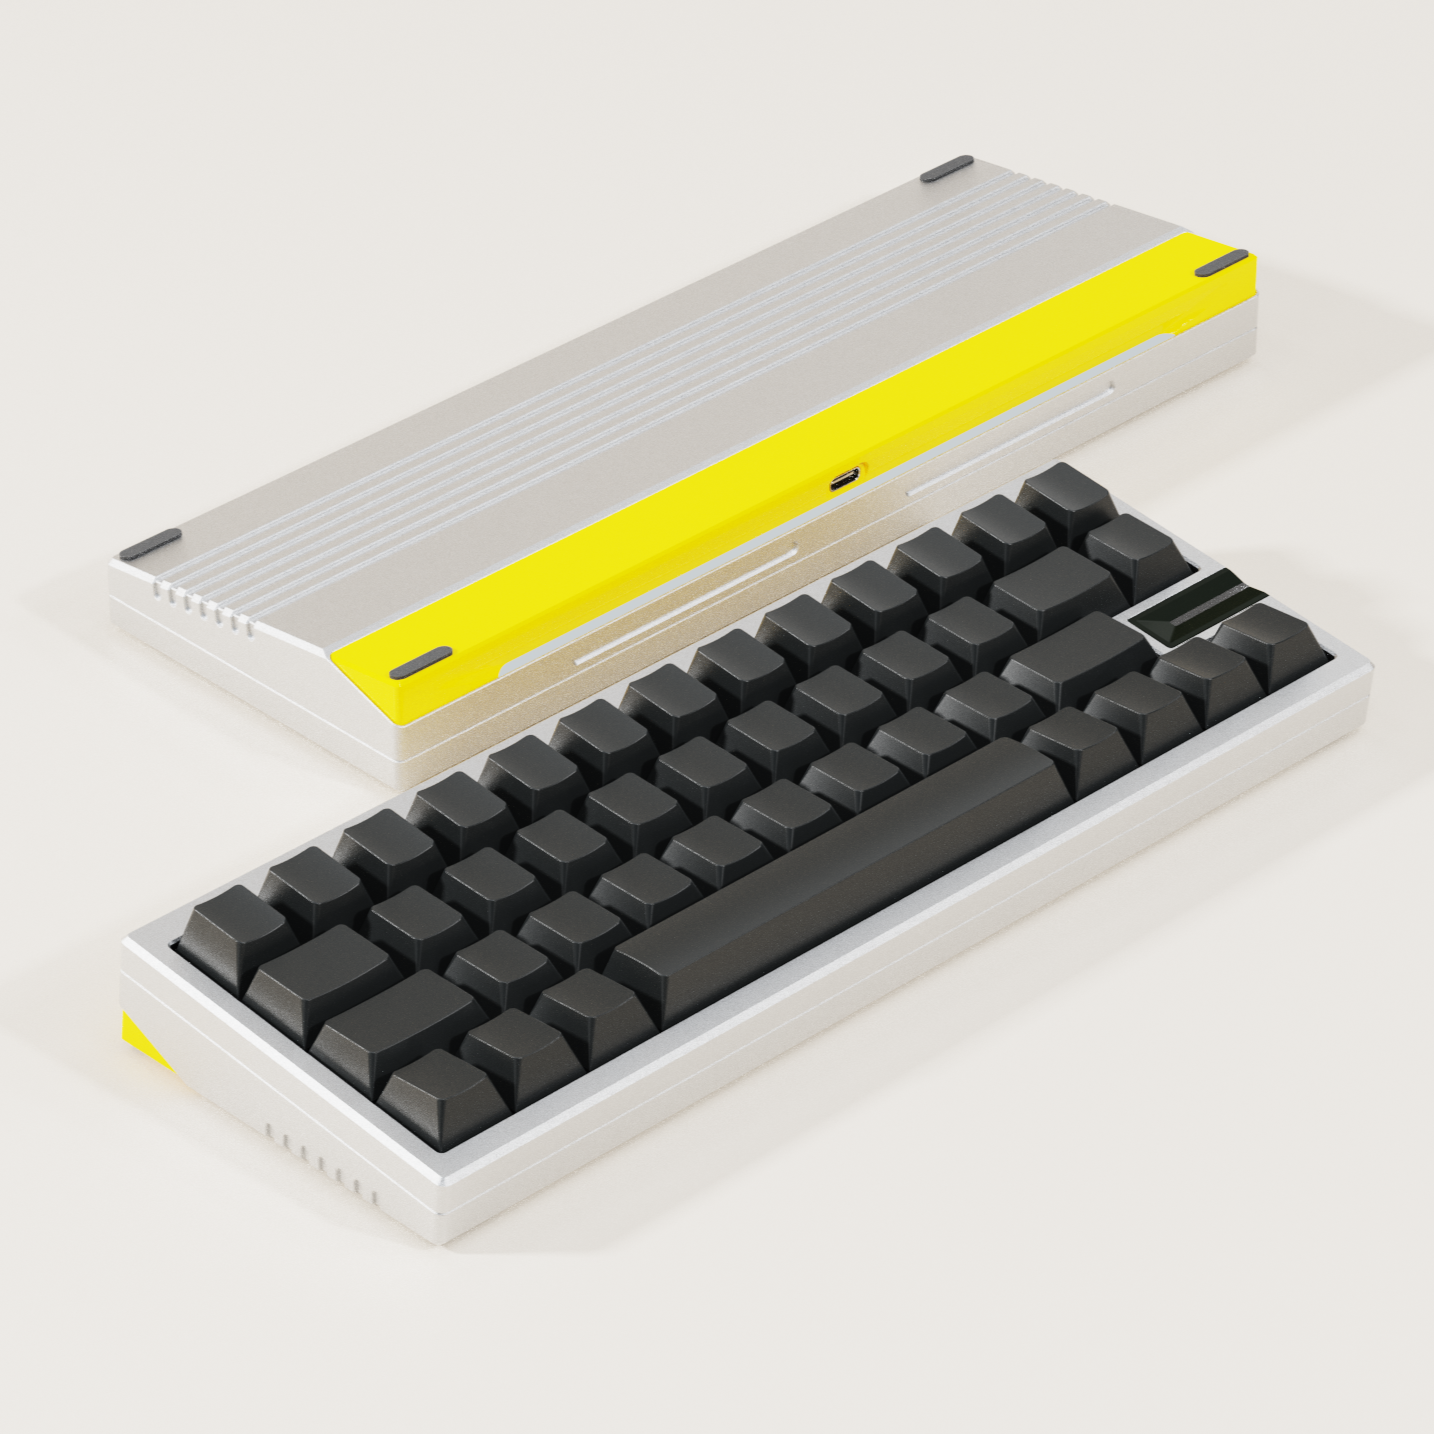 [GB] GuangQi 40 Mechanical Keyboard Kit - Dual Mode, Split Space, Combination Of Aluminum And Acrylic